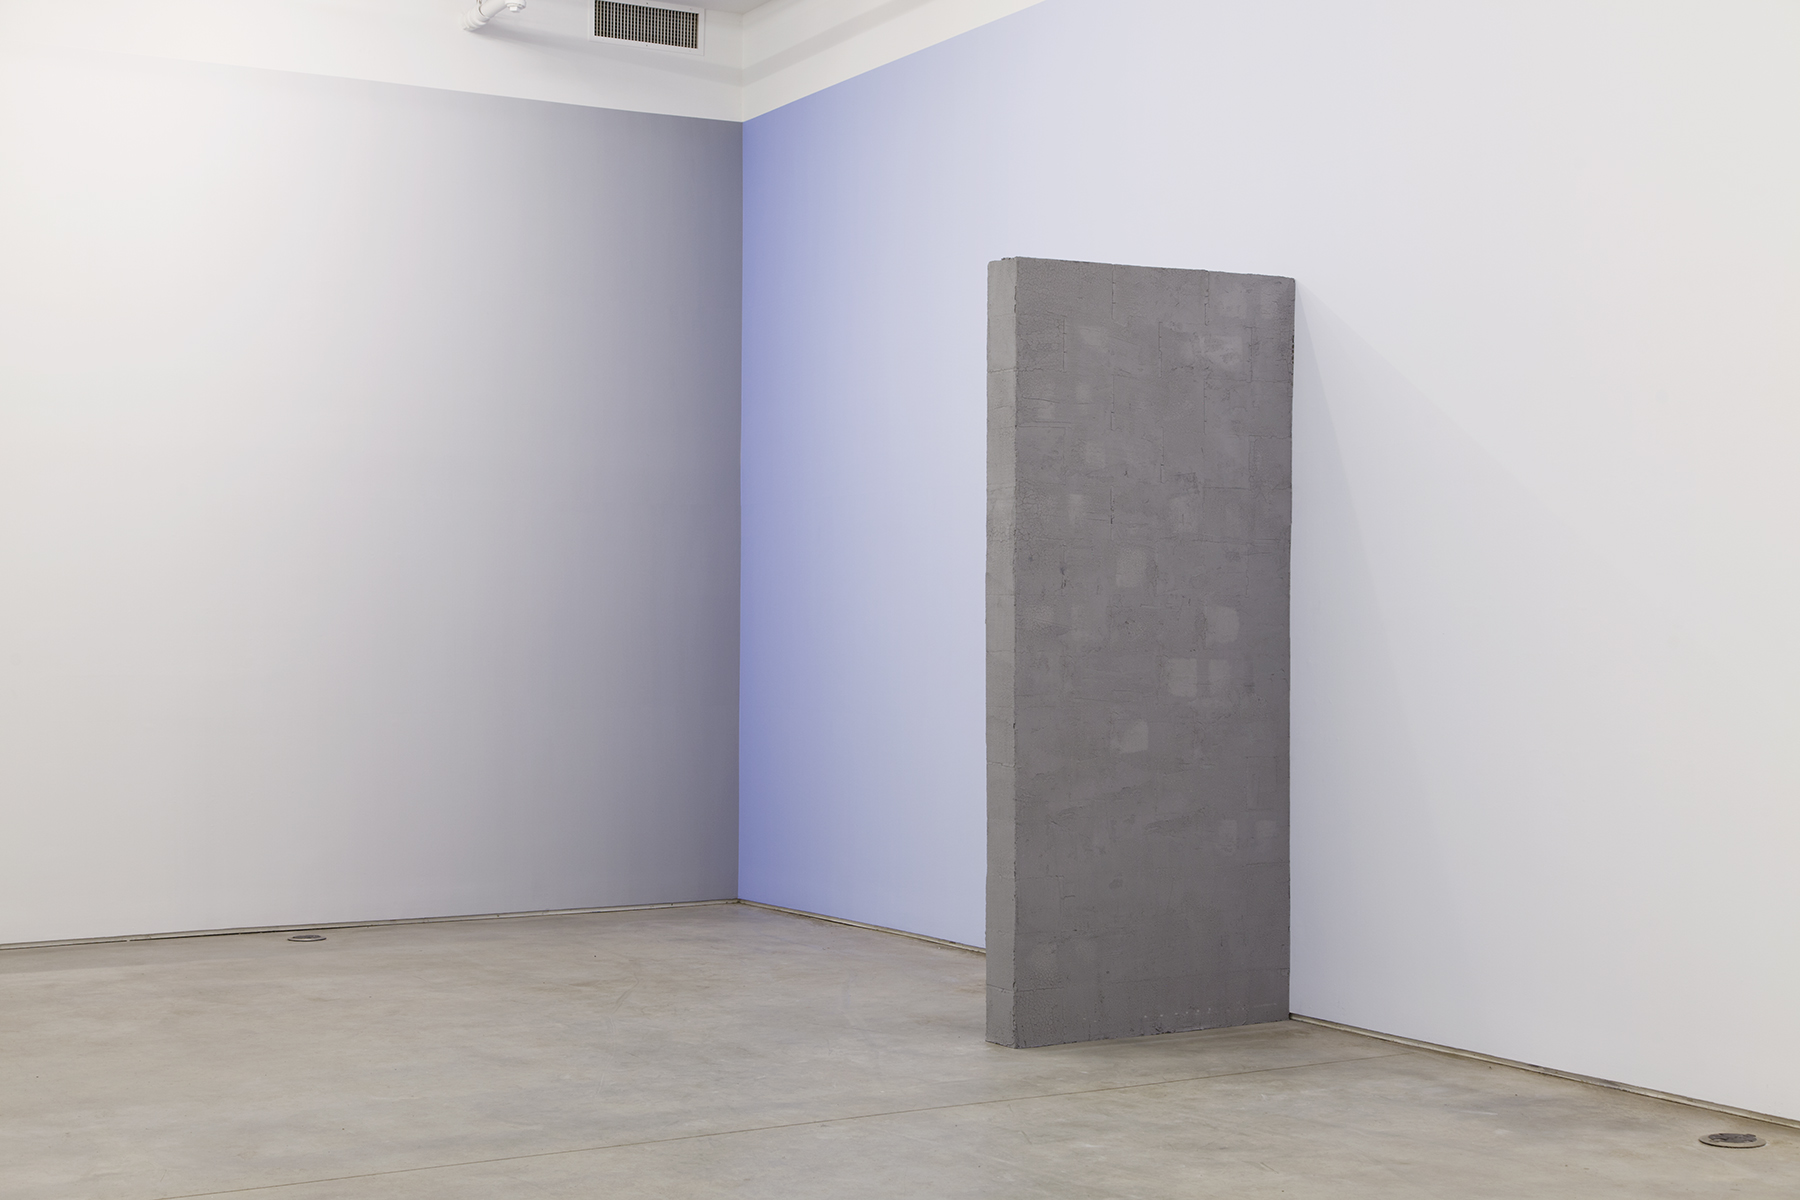 2 - Pieter Vermeersch at Team Gallery New York - 23.04.2014